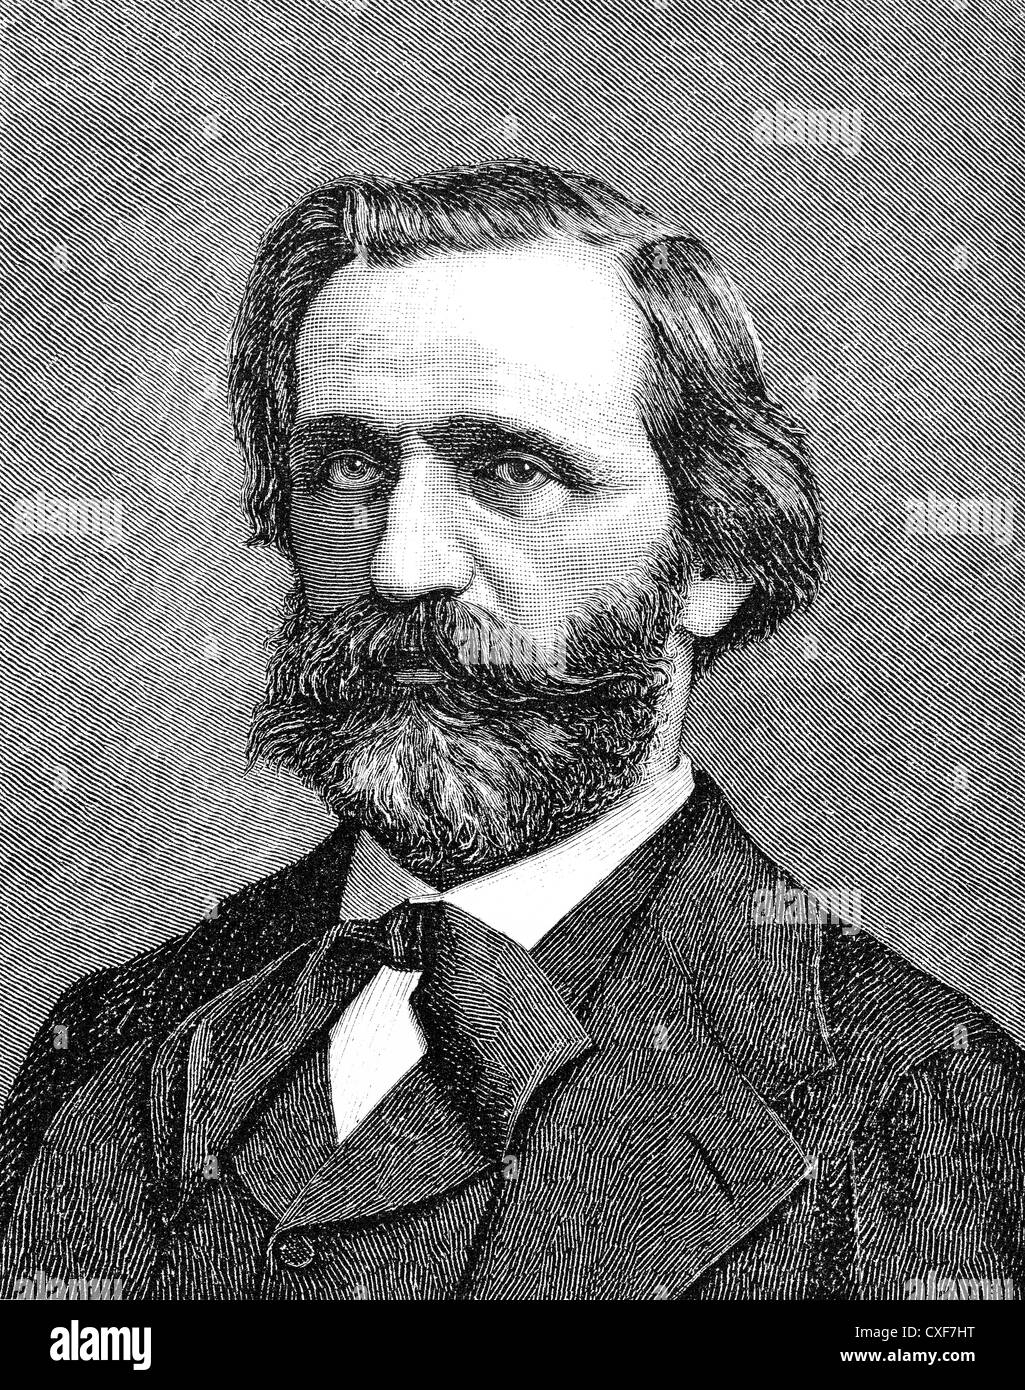 Giuseppe Fortunino Francesco Verdi, 1813-1901, Italian composer, Stock Photo